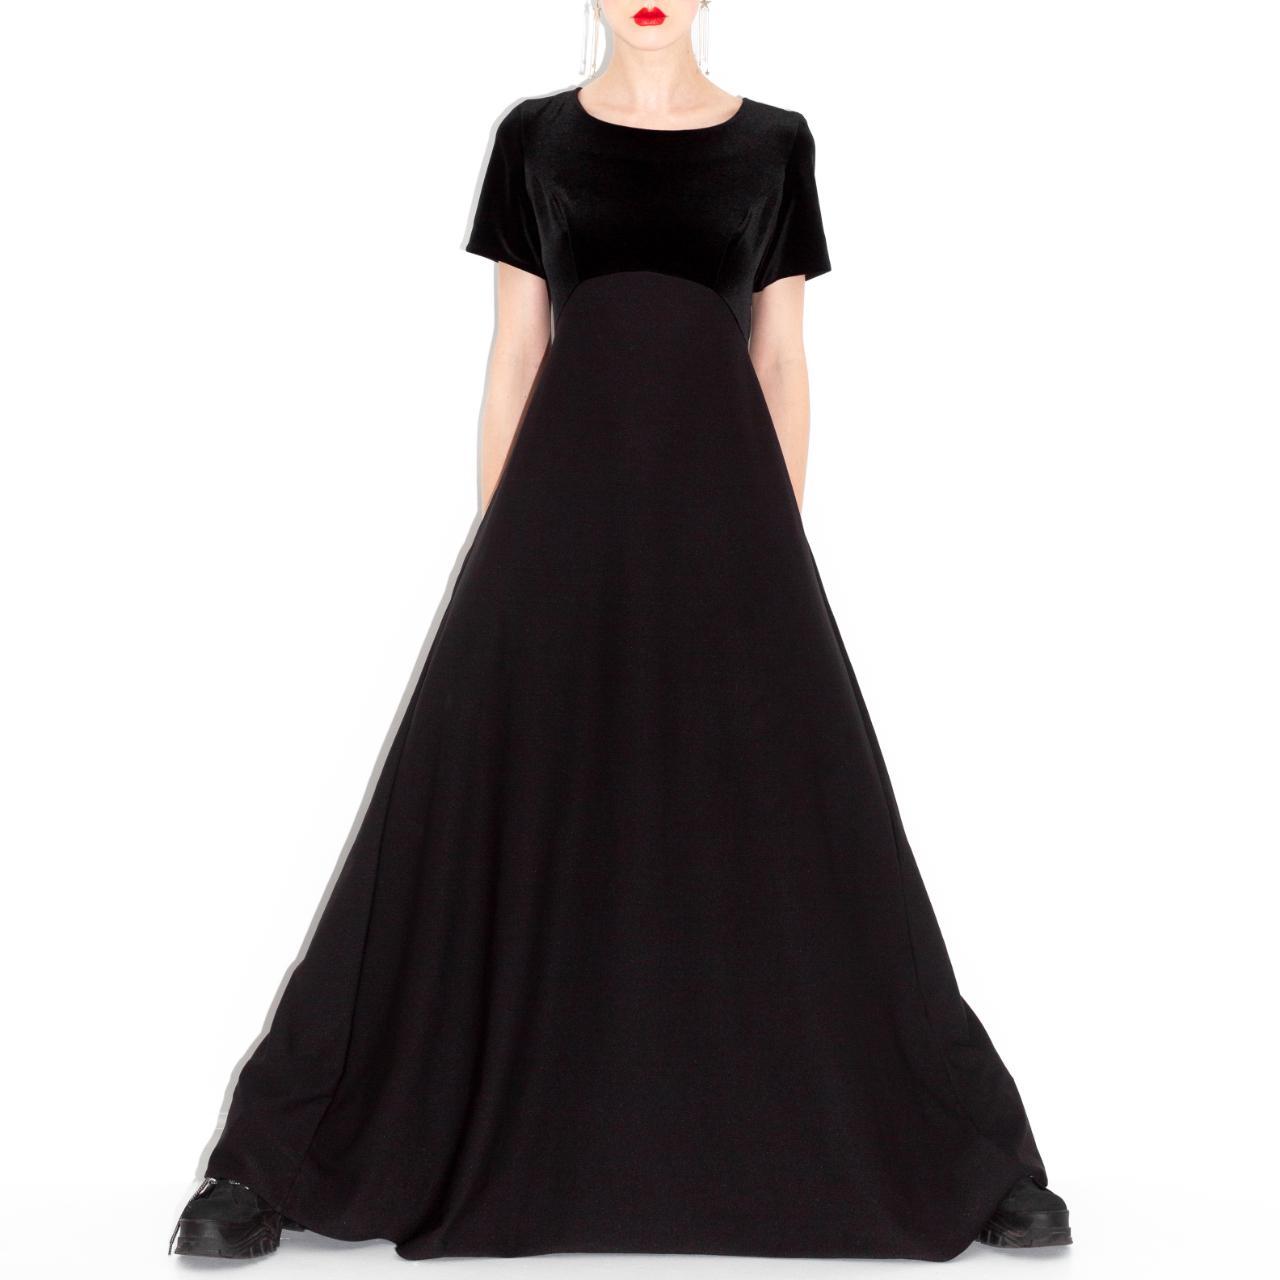 Reclaimed Vintage Women's Black Dress | Depop